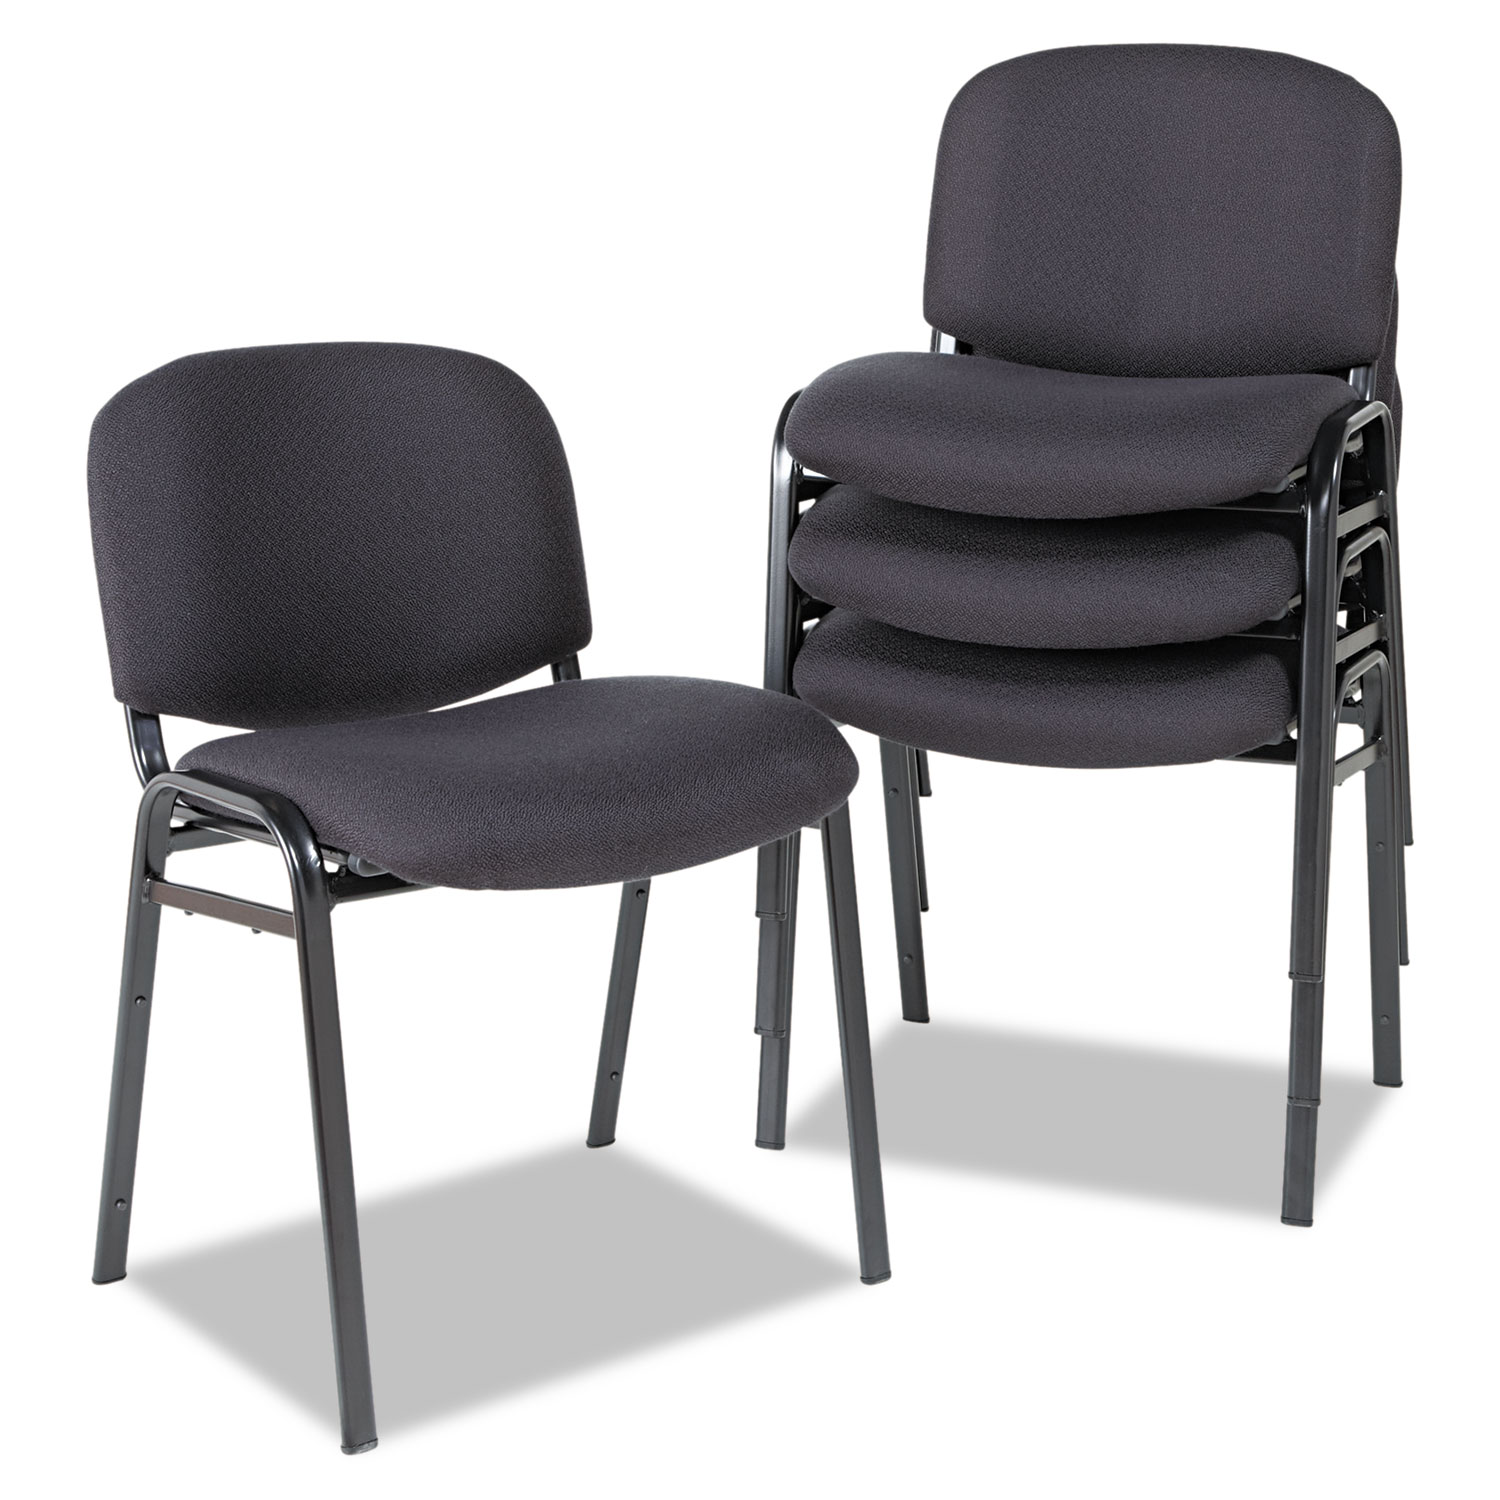 Alera Continental Series Stacking Chairs, Black Seat/Black Back, Black Base, 4/Carton